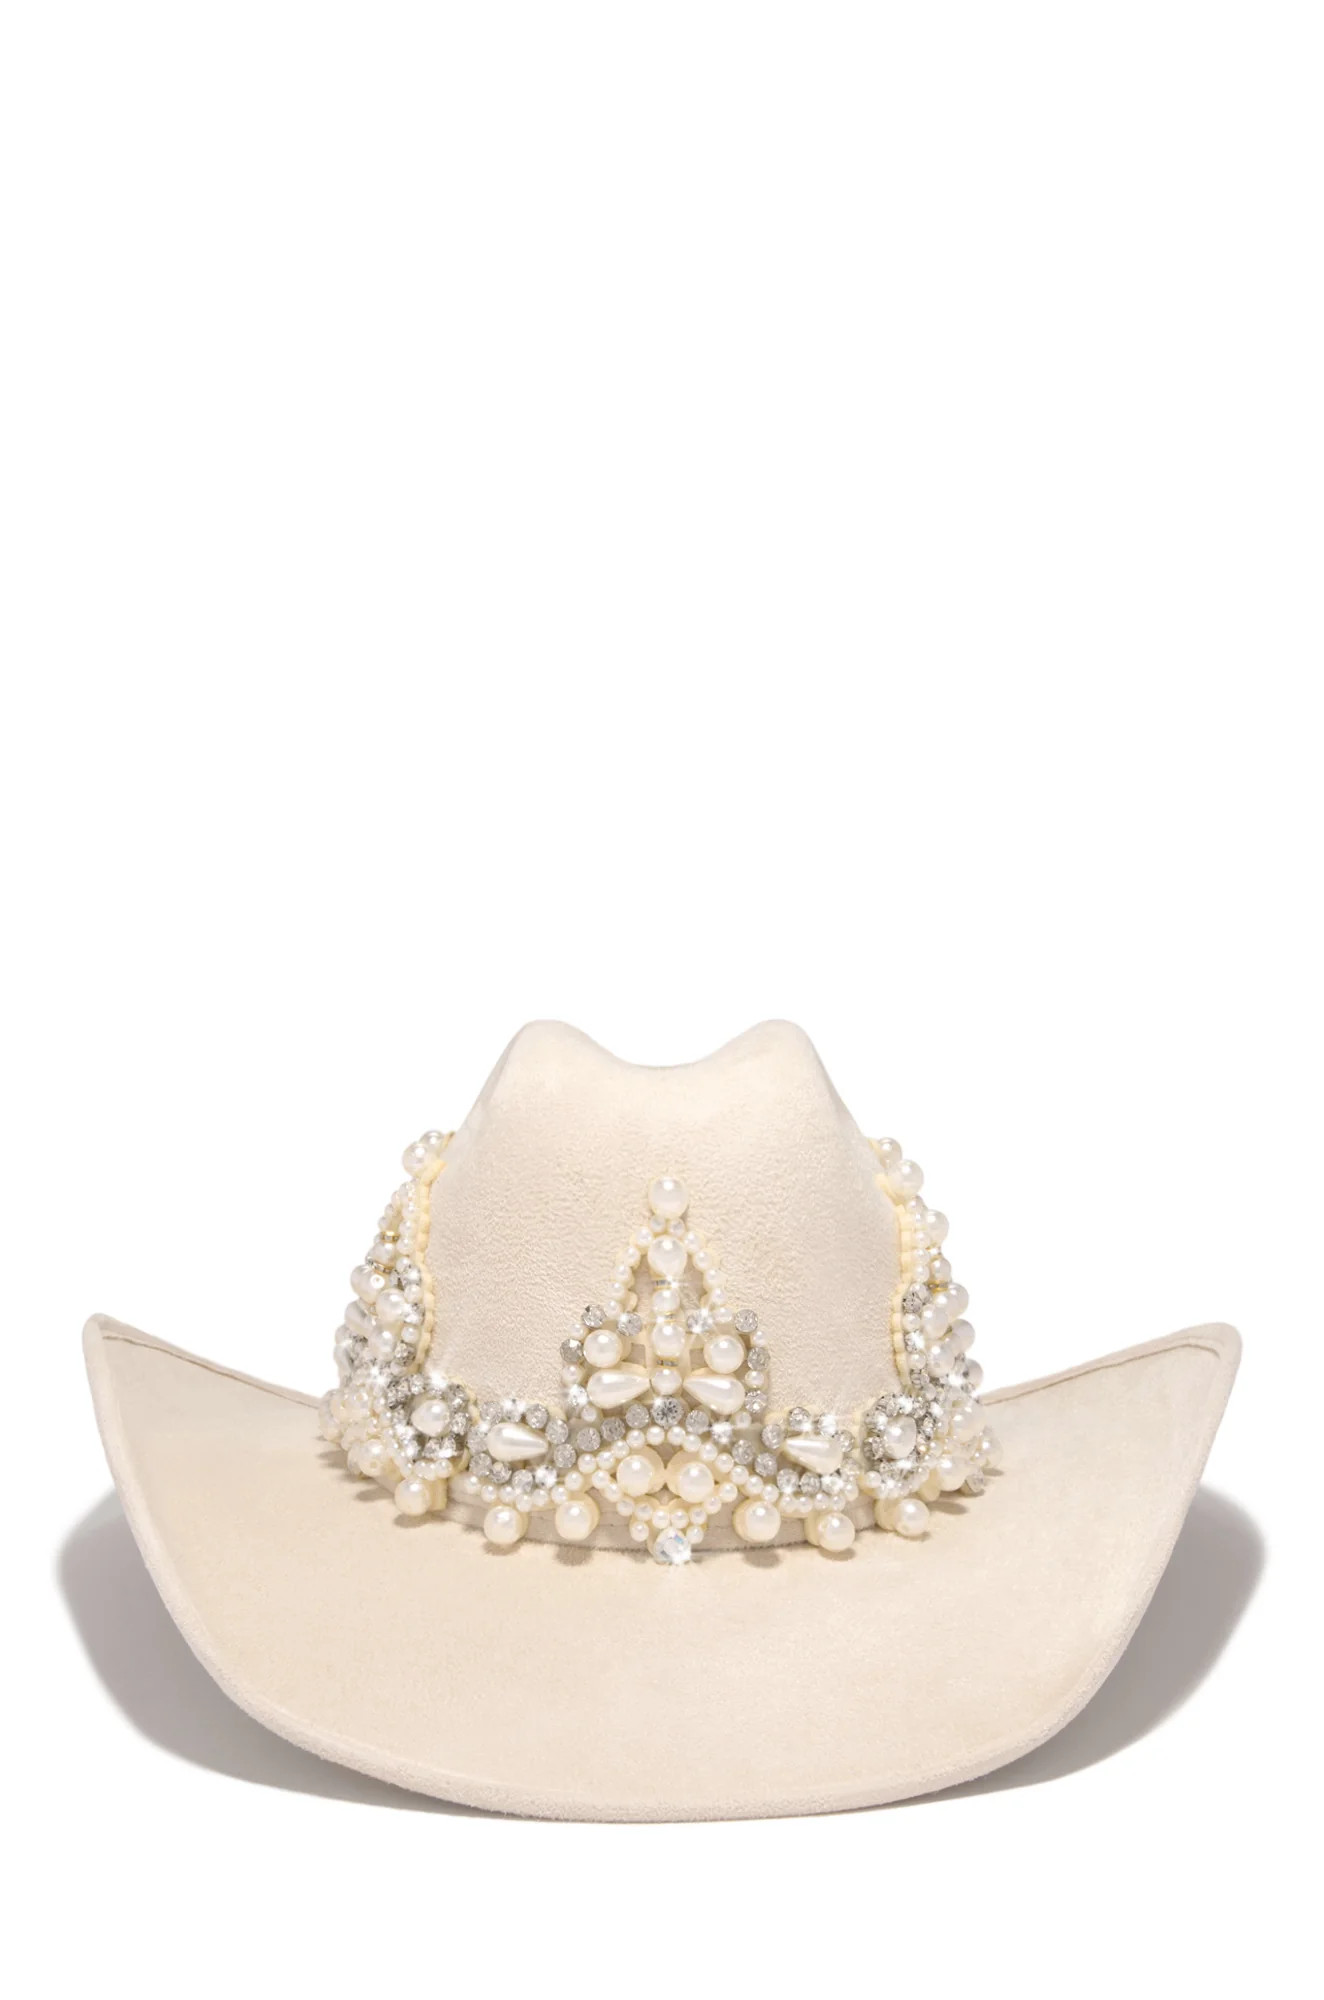 Miss Lola | Ivory Embellished Western Hat | MISS LOLA